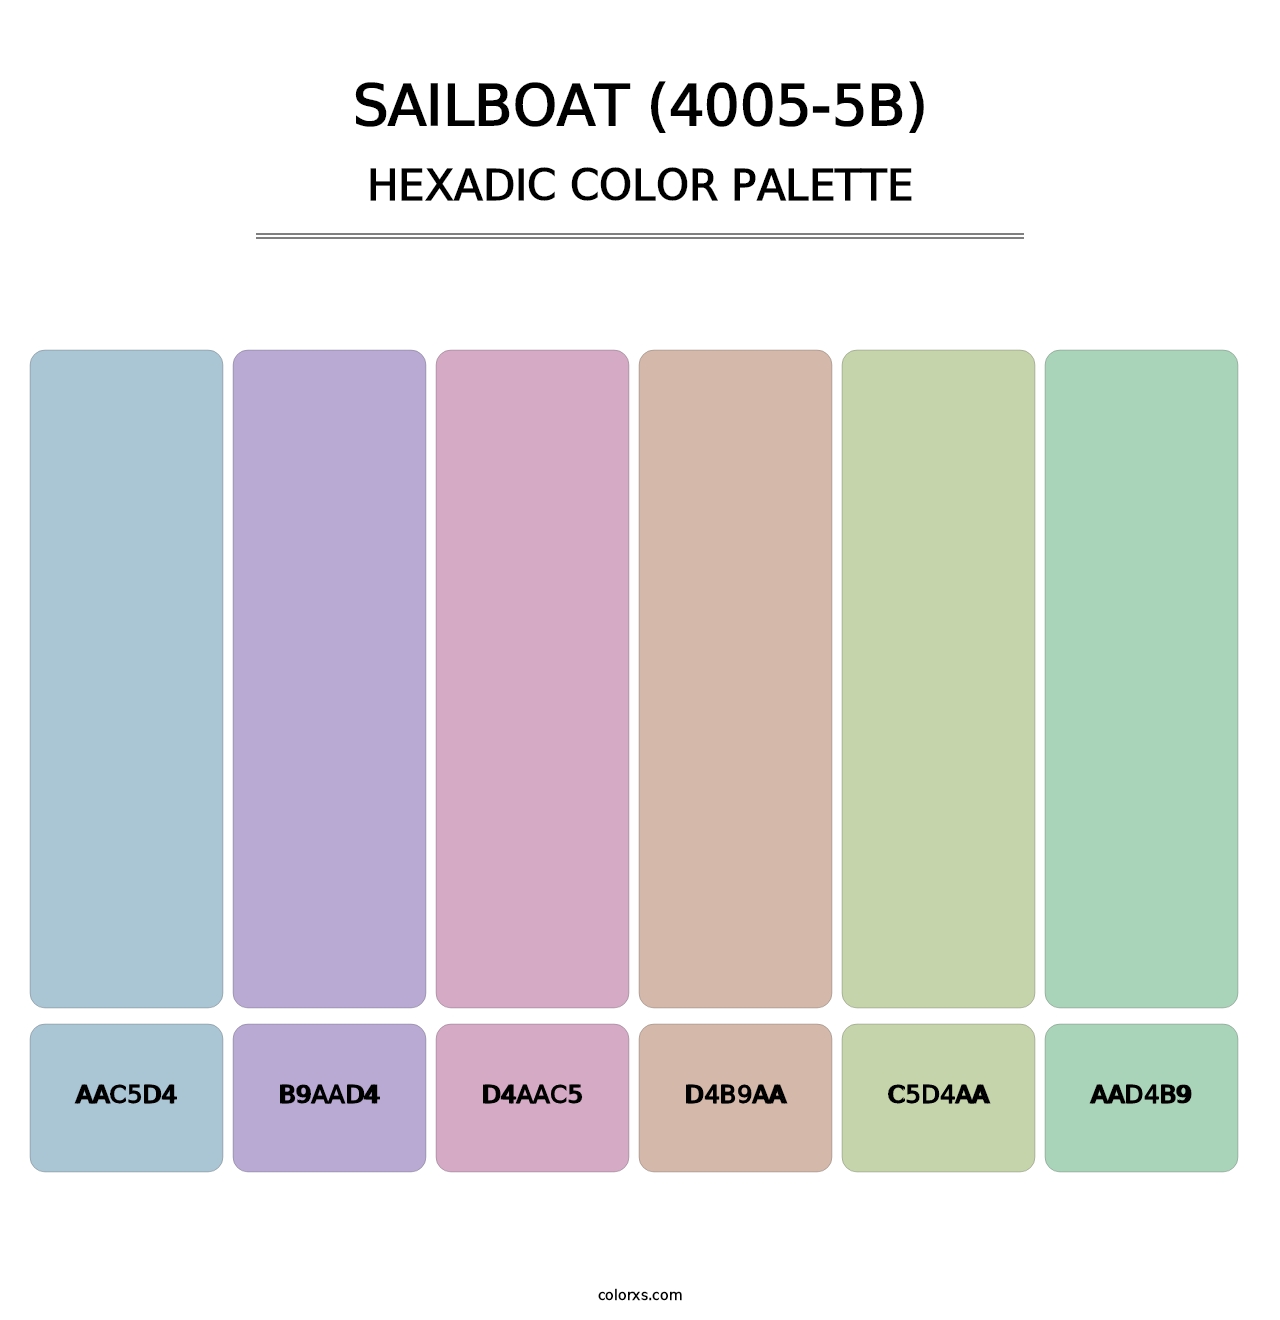 Sailboat (4005-5B) - Hexadic Color Palette